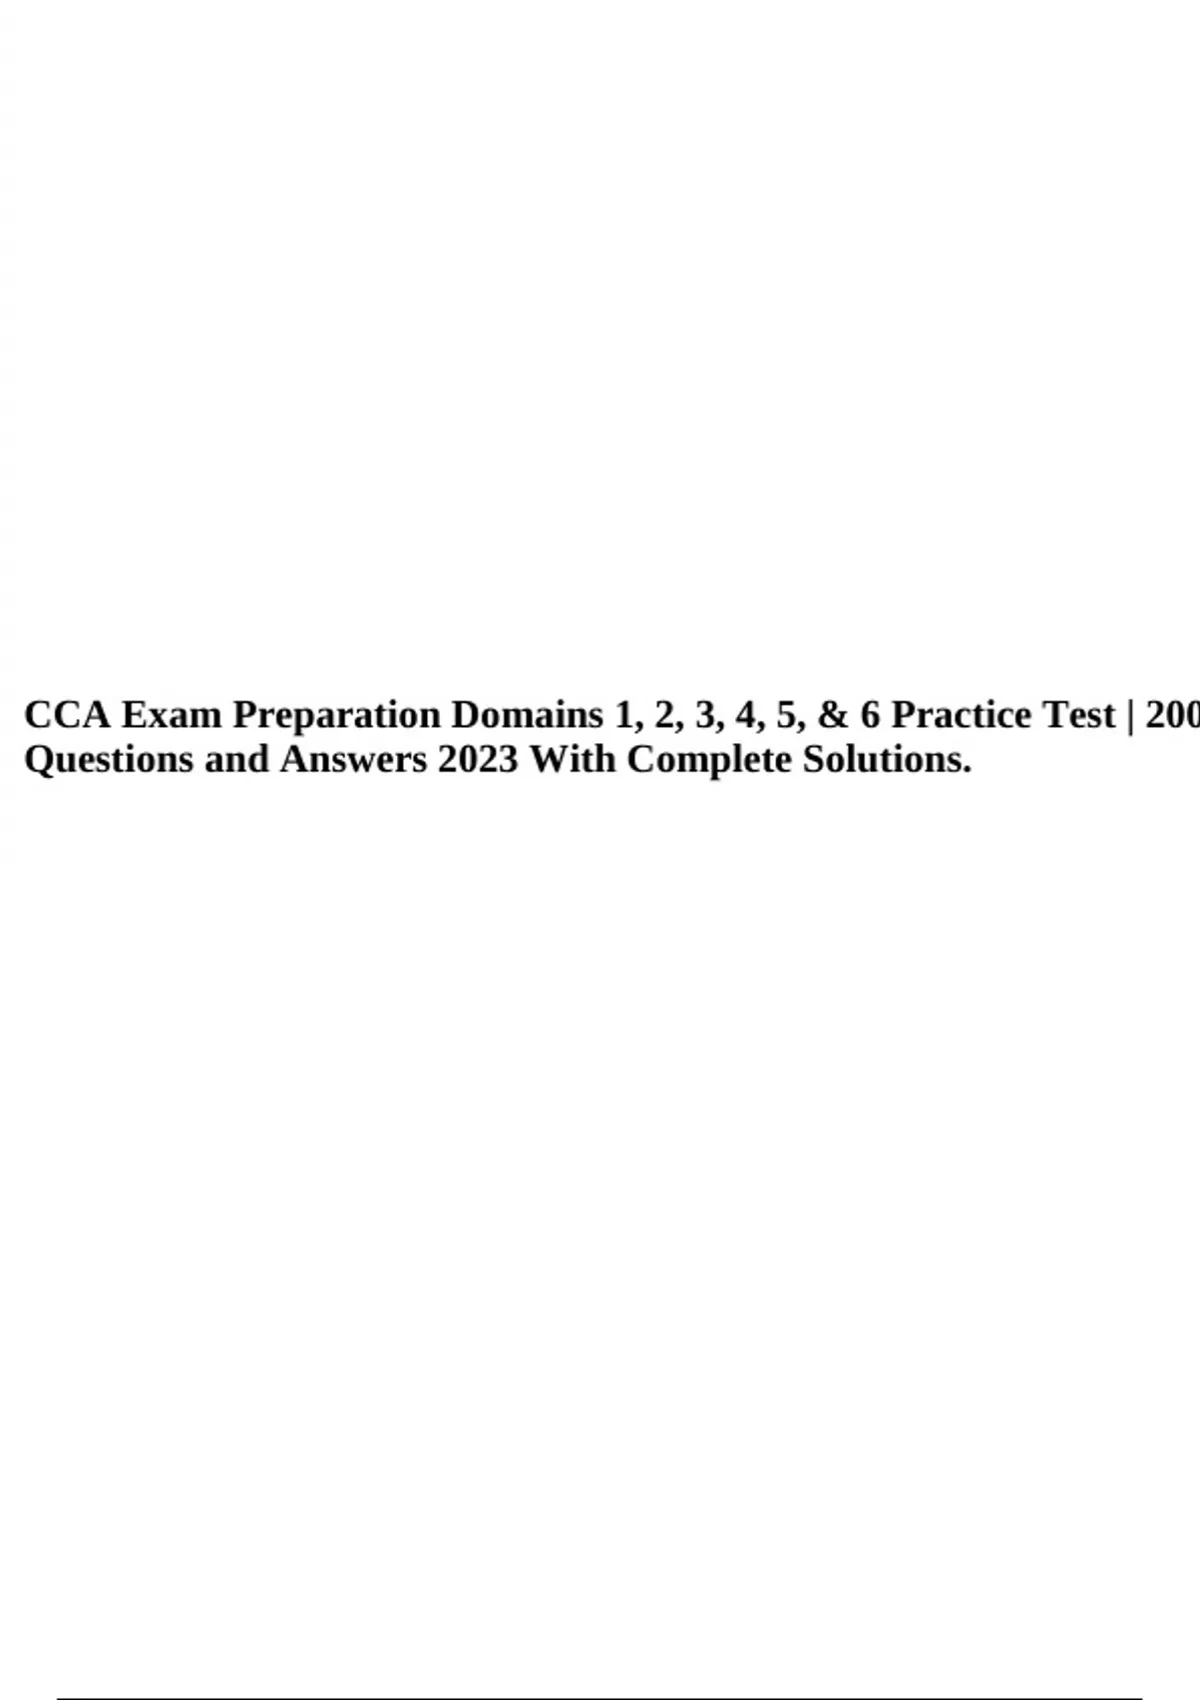 CCA Exam Preparation Domains 1, 2, 3, 4, 5, & 6 Practice Test 200